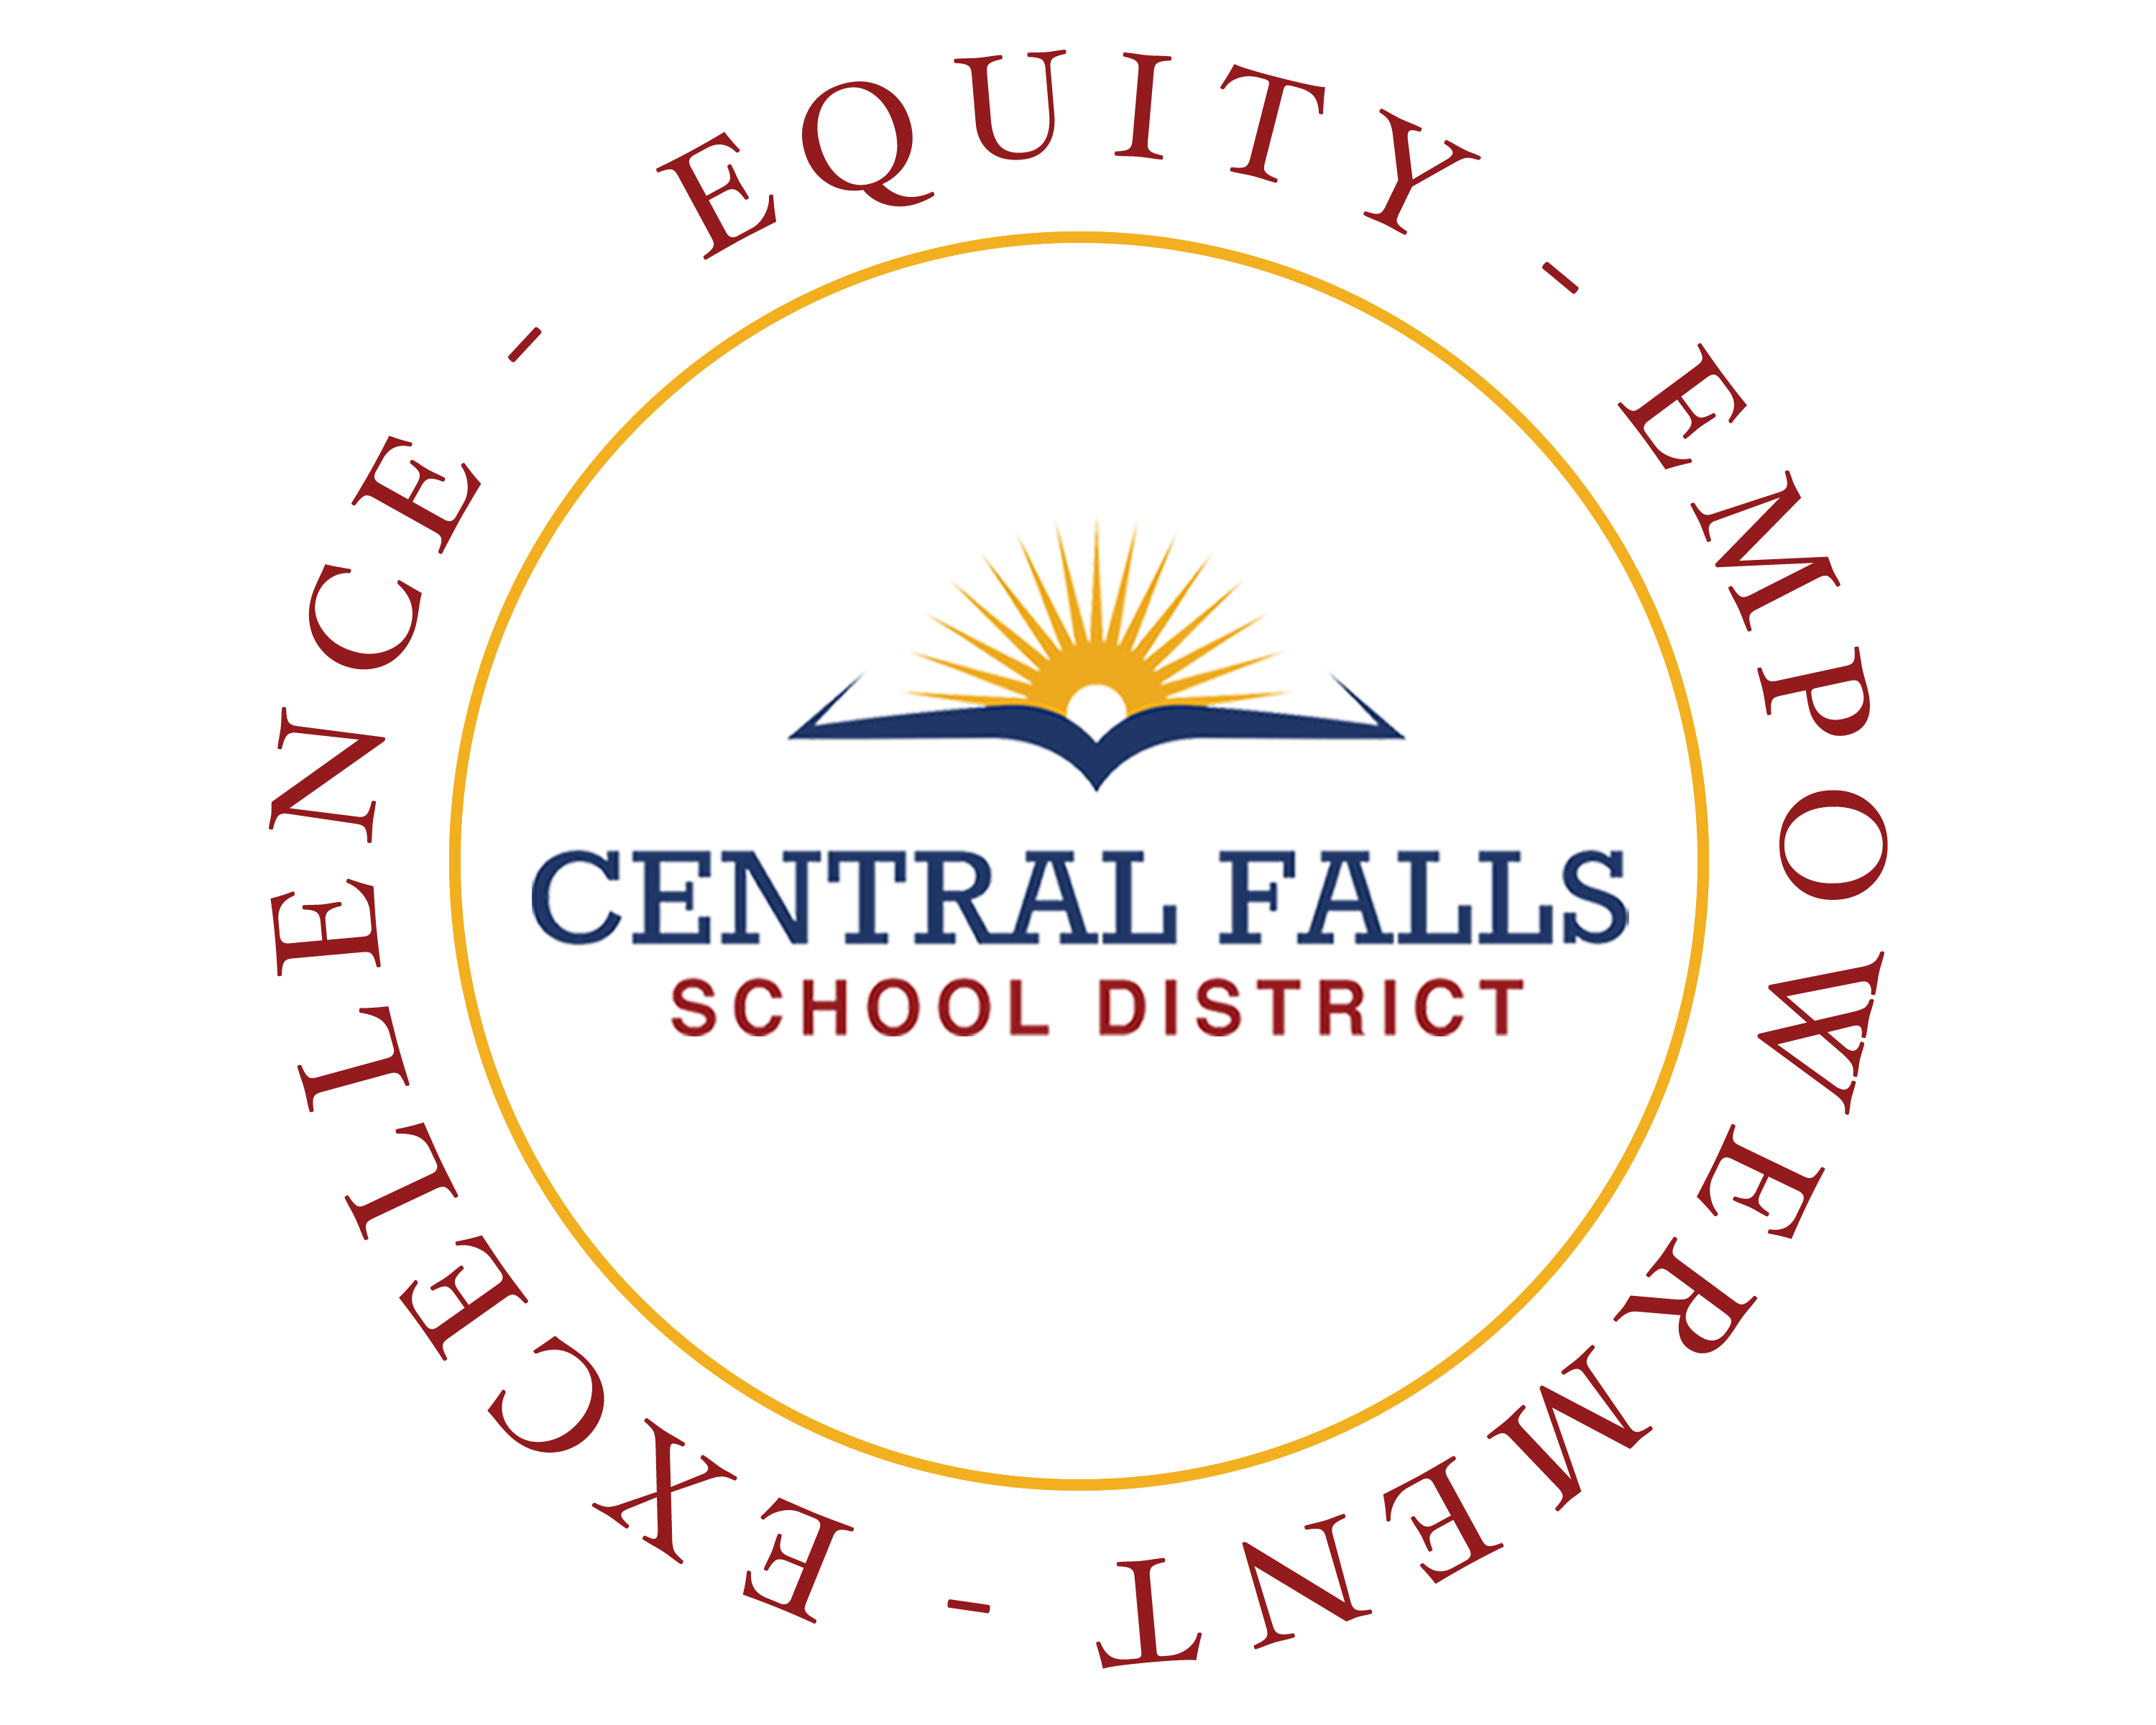 Organization logo of Central Falls School District